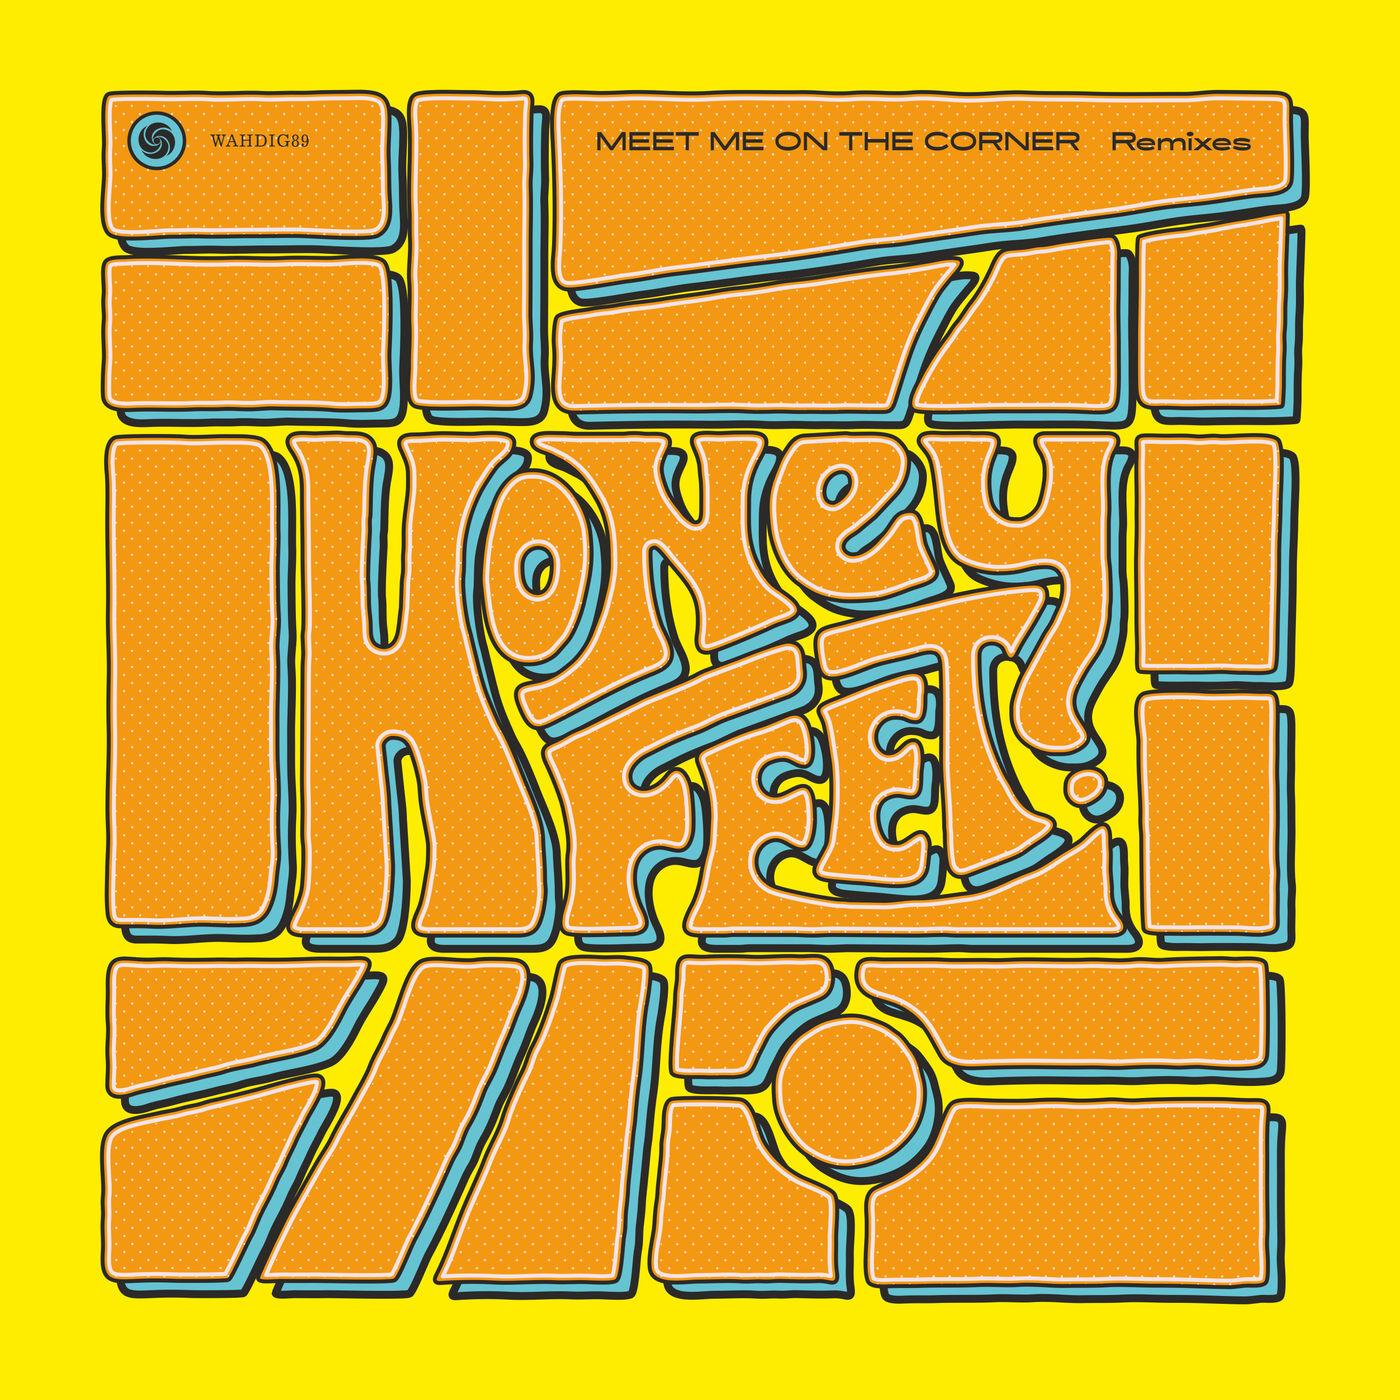 Honeyfeet - Meet Me on the Corner (Remixes) / Wah Wah 45s Publishing Ltd.